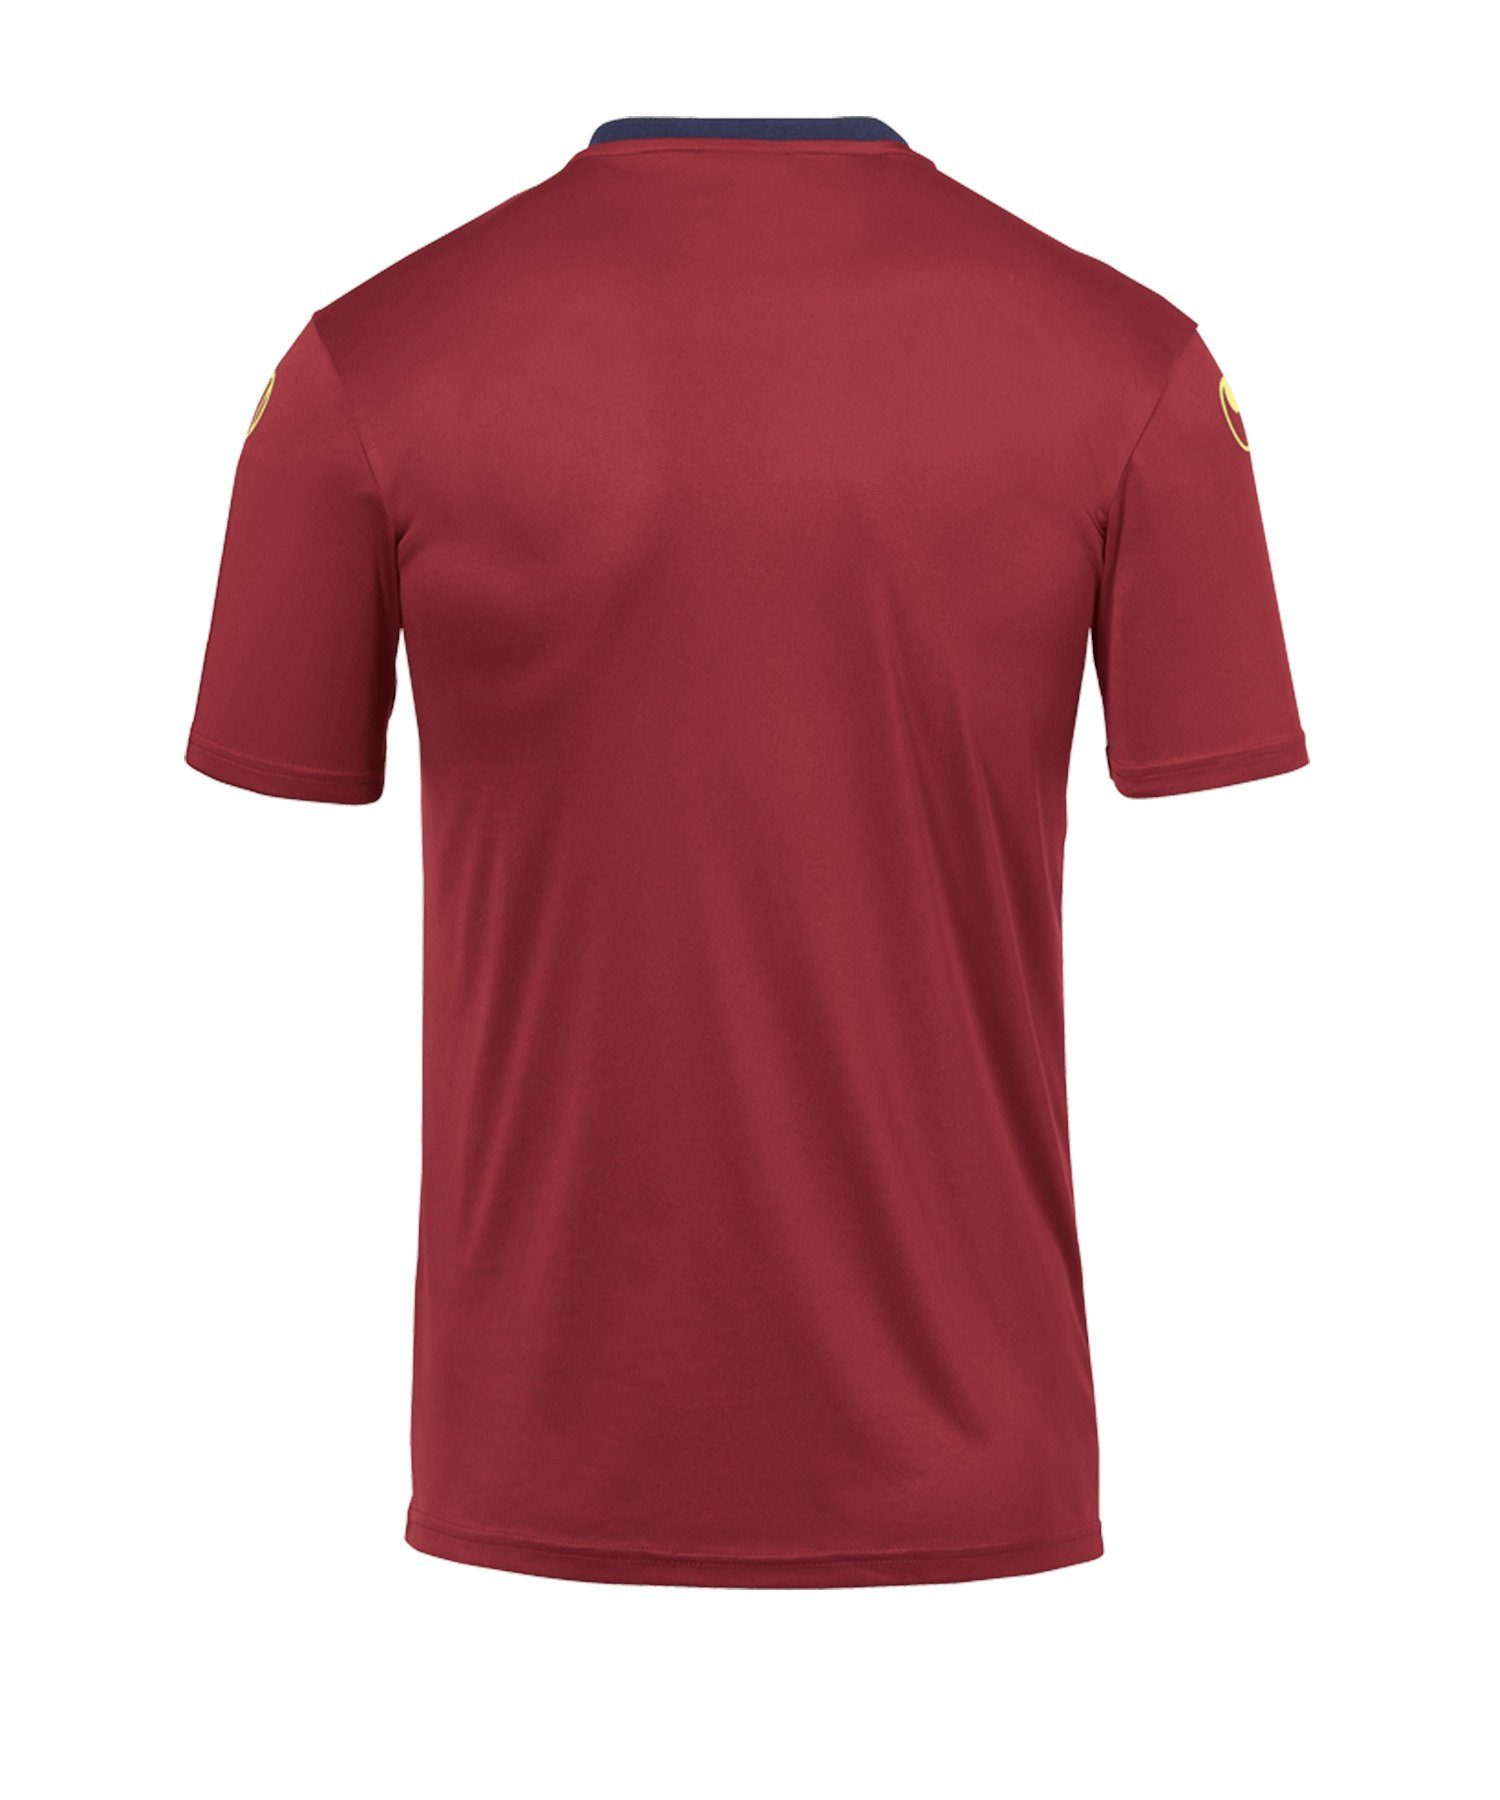 default T-Shirt Offense rotblaugelb 23 uhlsport Trainingsshirt